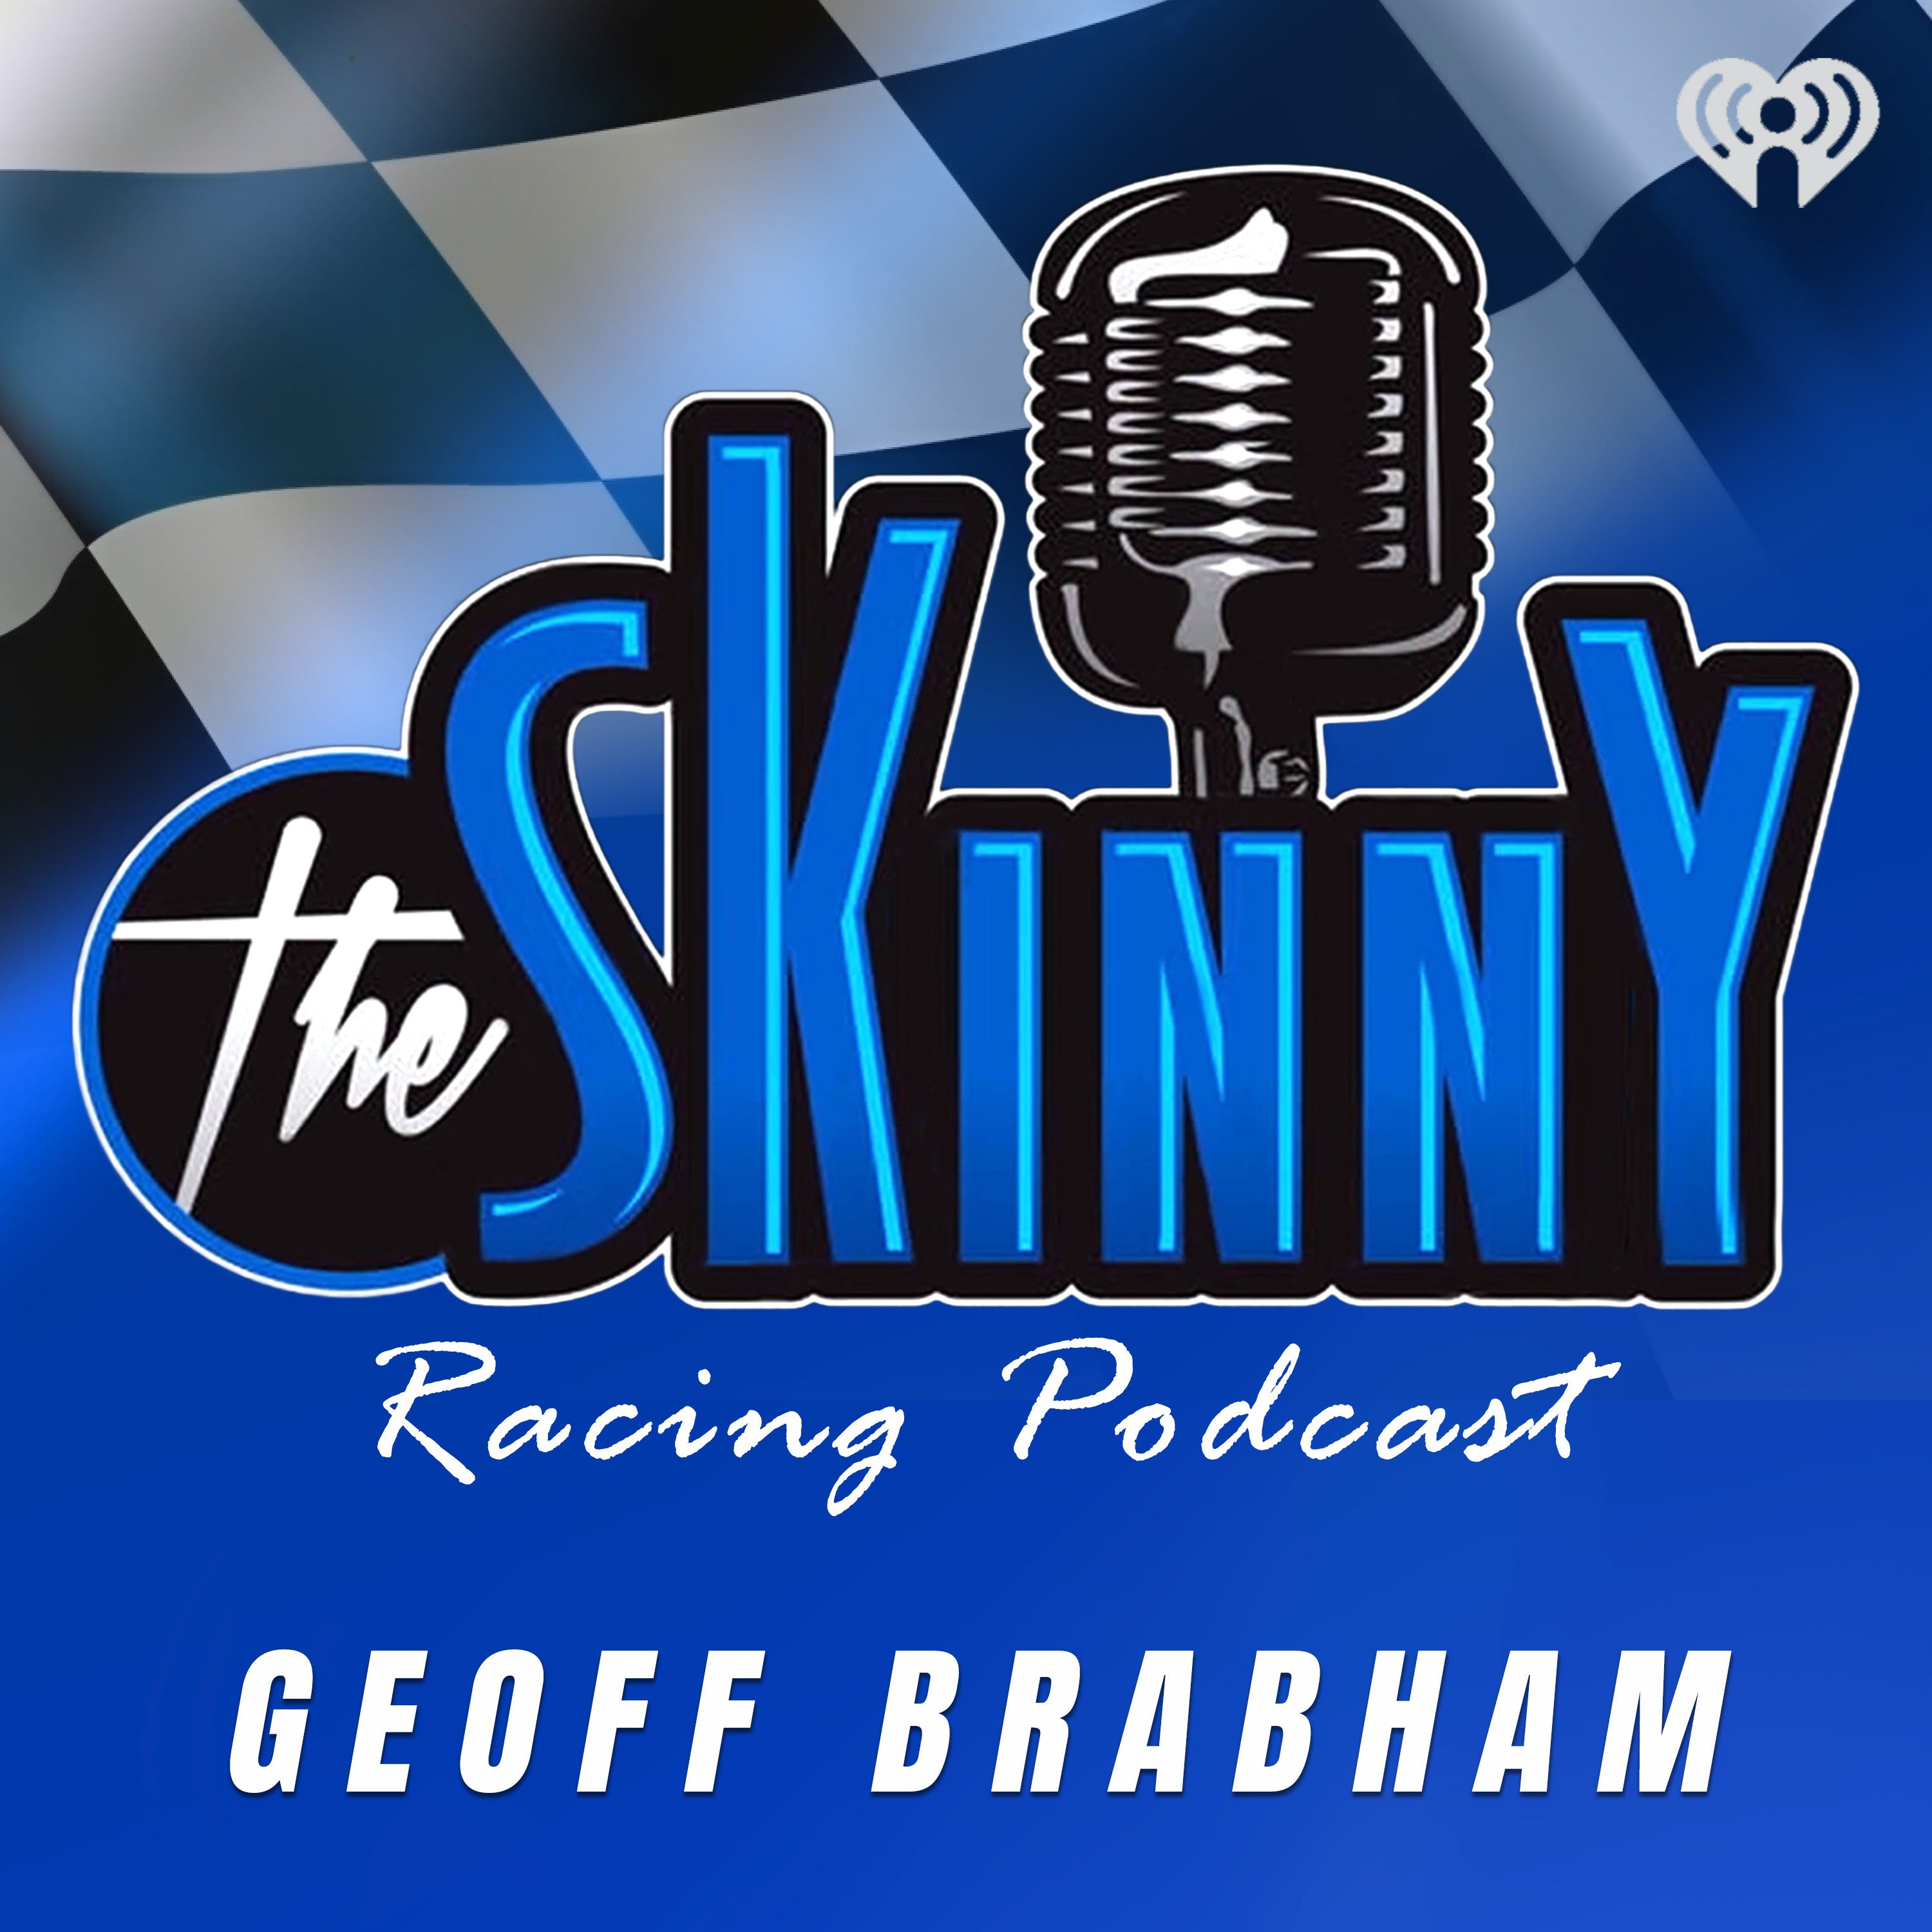 Geoff Brabham is this week's guest